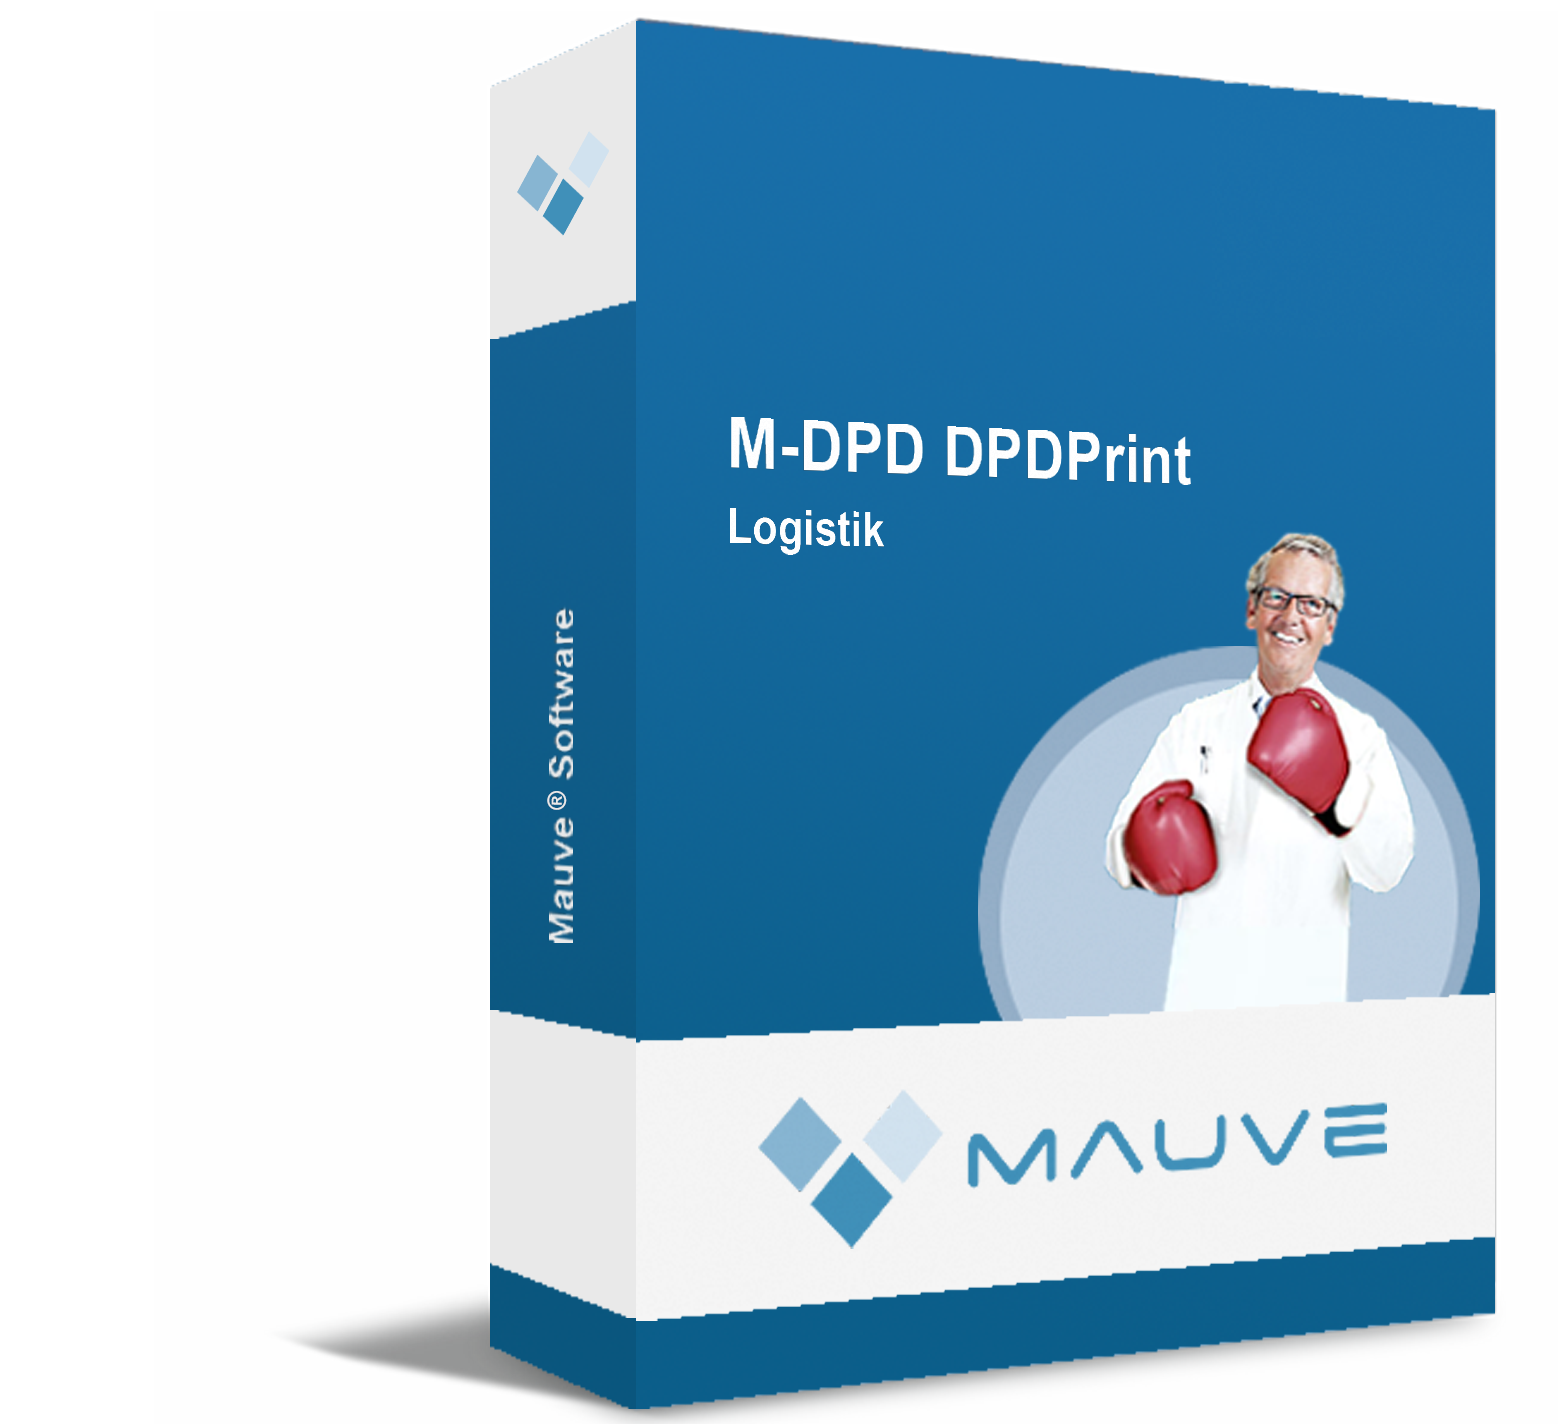 M-DPD DPDPrint